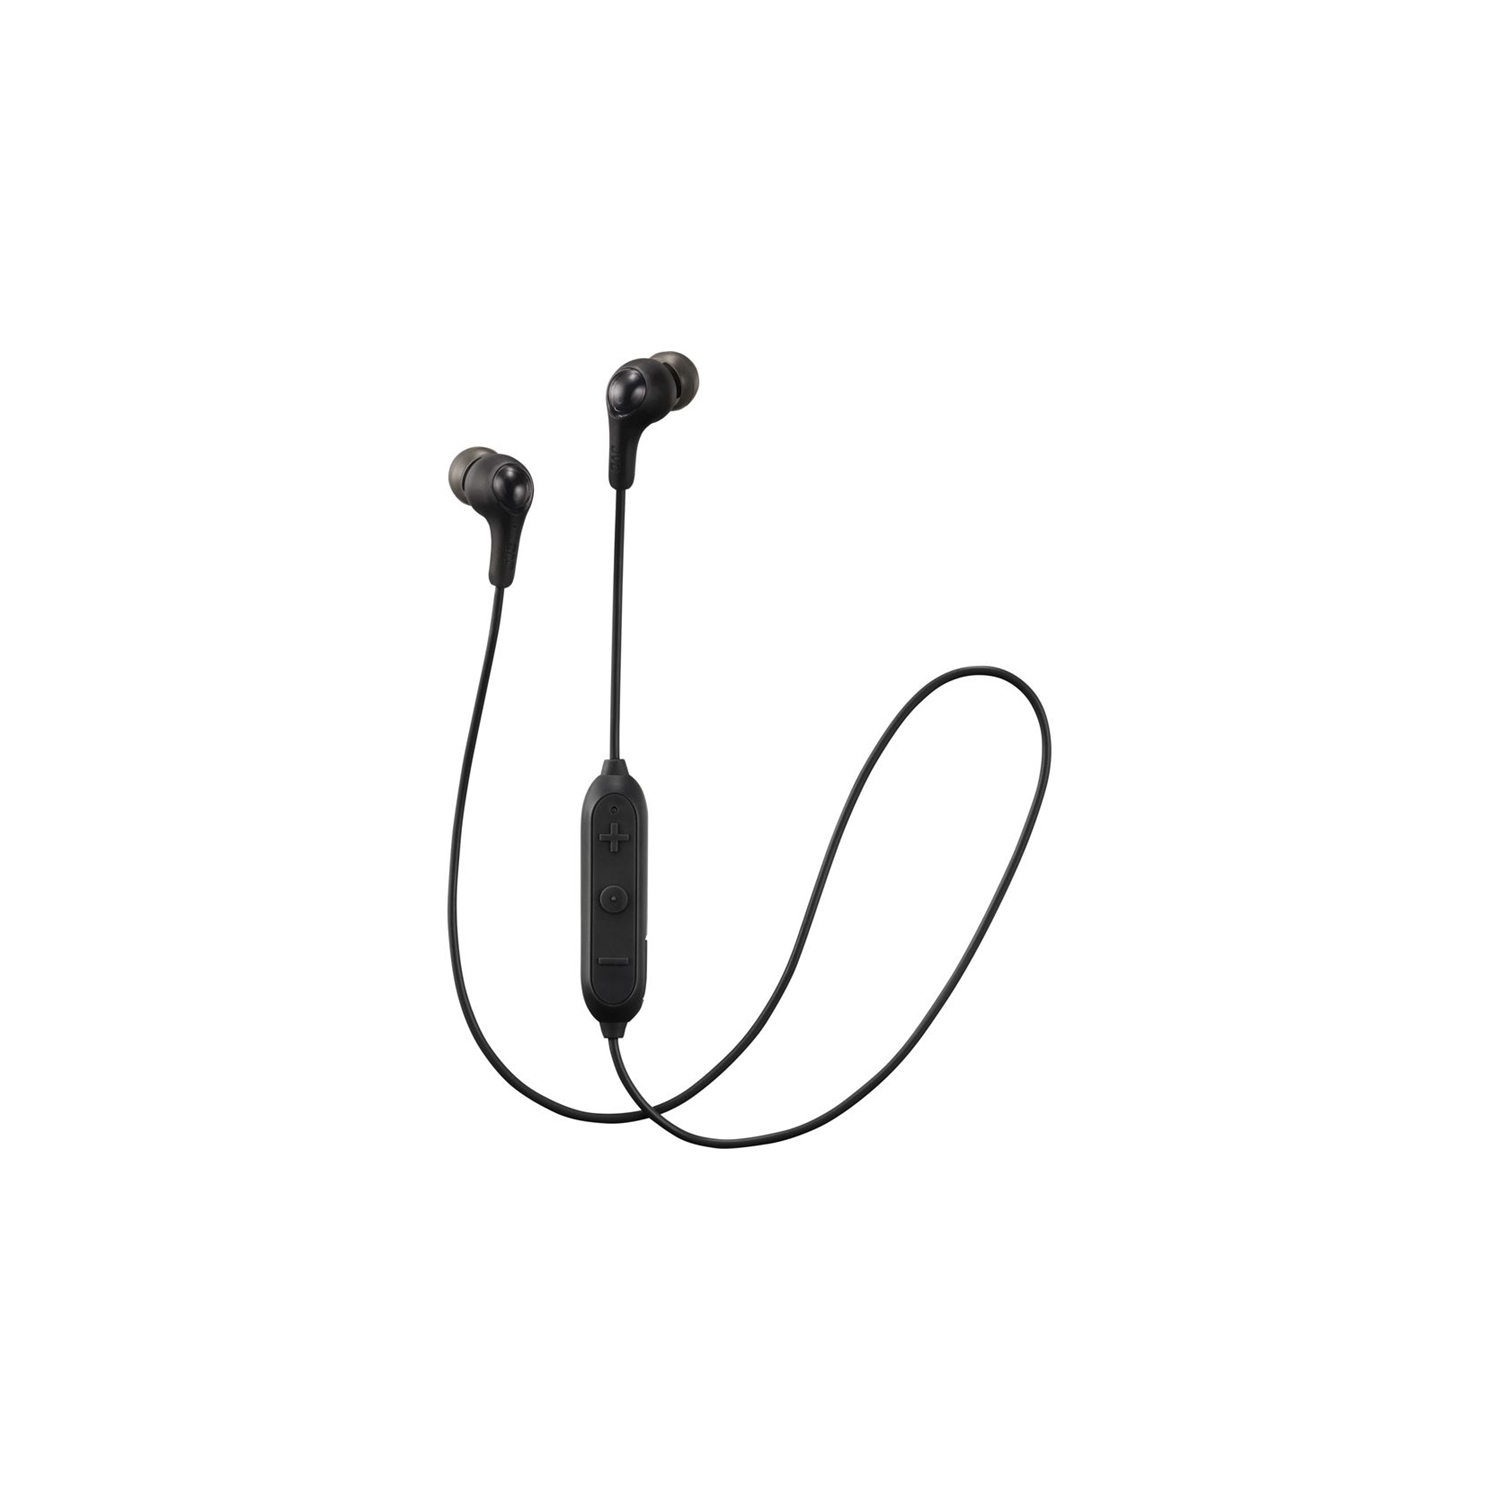 Jvc In-Ear/Ear Bud Wireless Bluetooth Headphone (HA-FX9BT-B) - Black